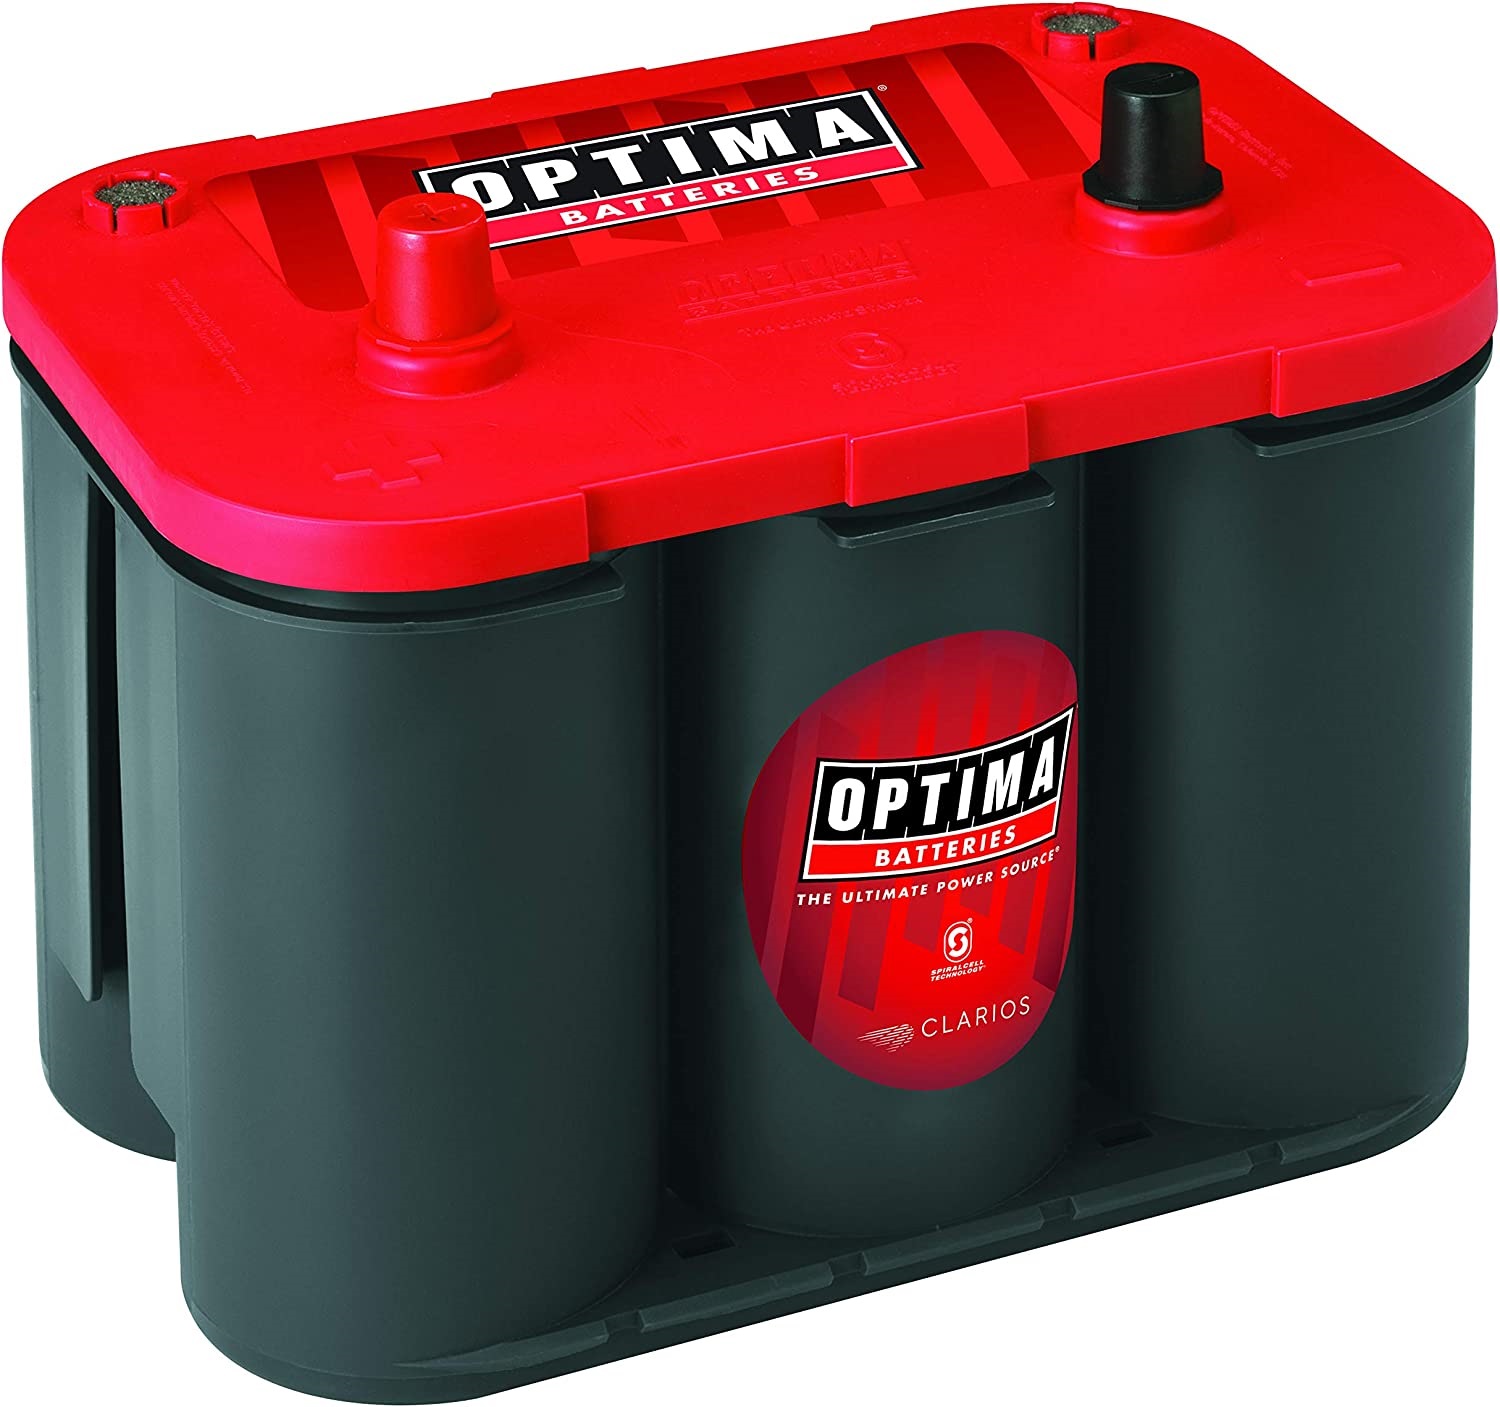 Optima RedTop Starting 12-Volt Batteries 9002-002 4